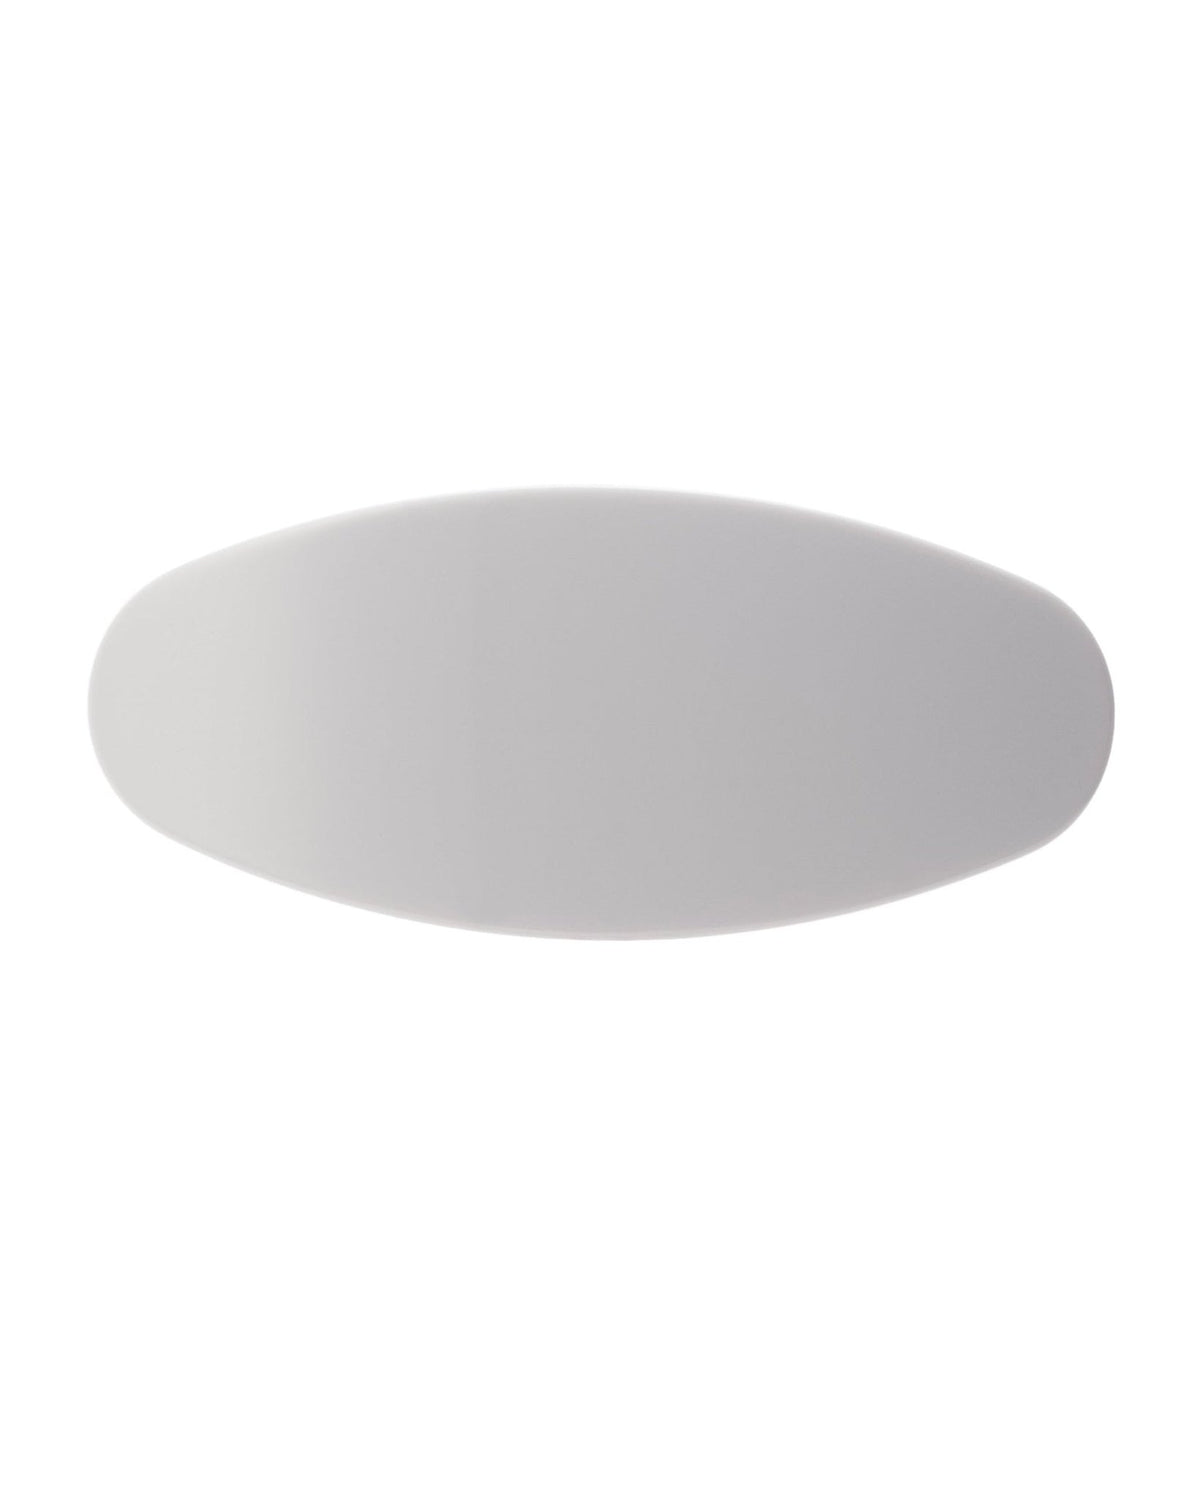 Jumbo Oval Clip in Light Grey - MACHETE